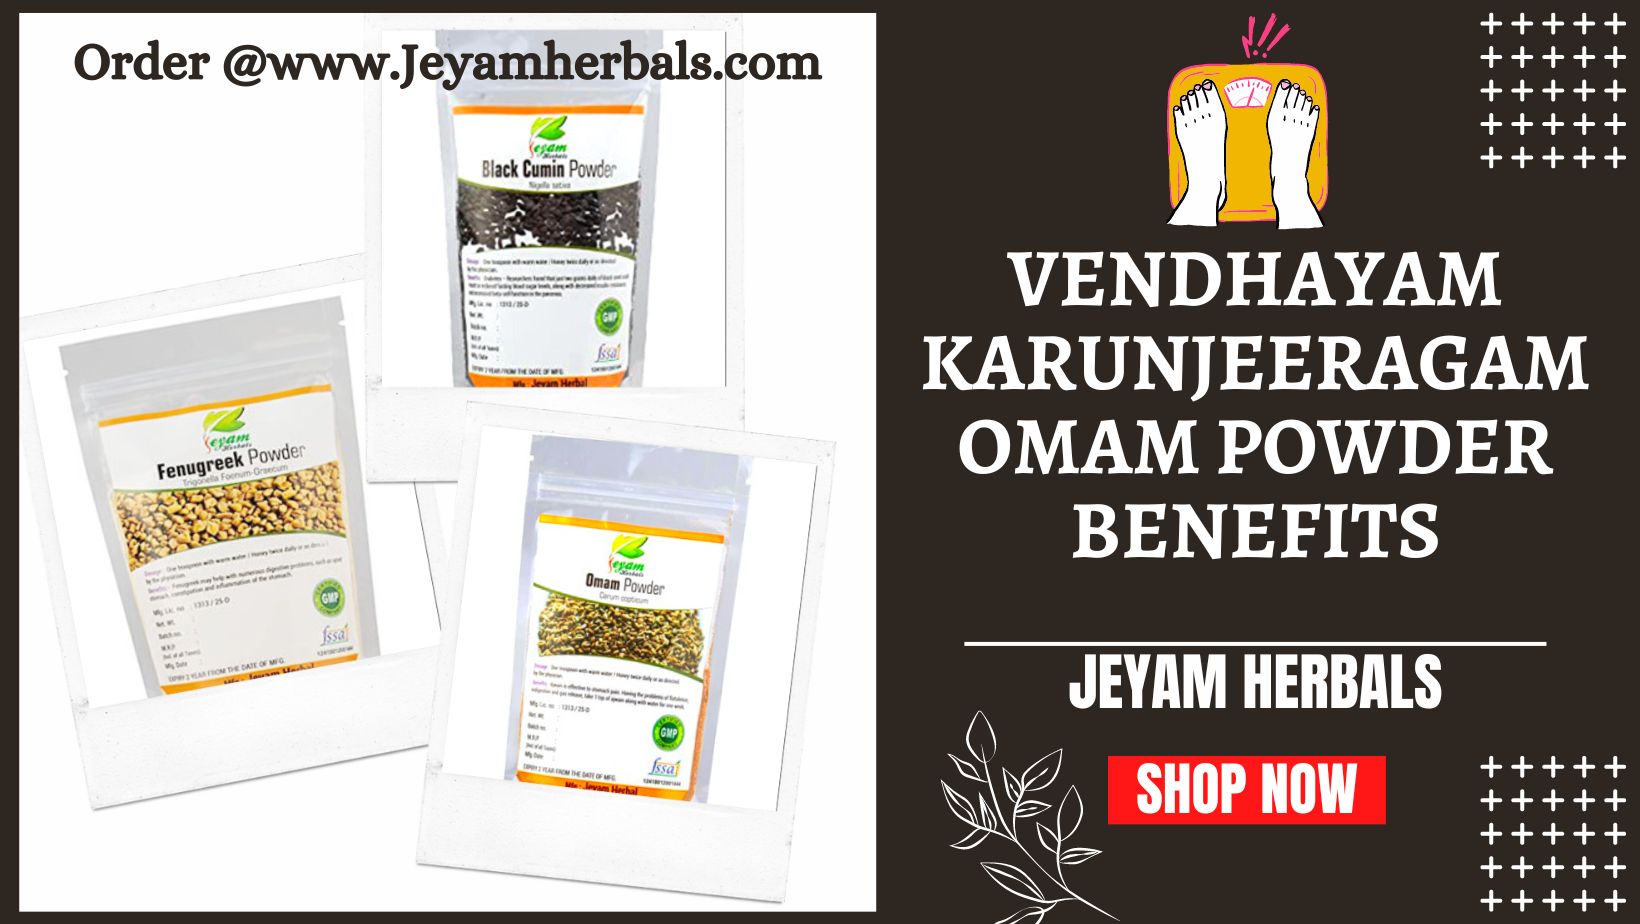 Vendhayam karunjeeragam omam powder benefits